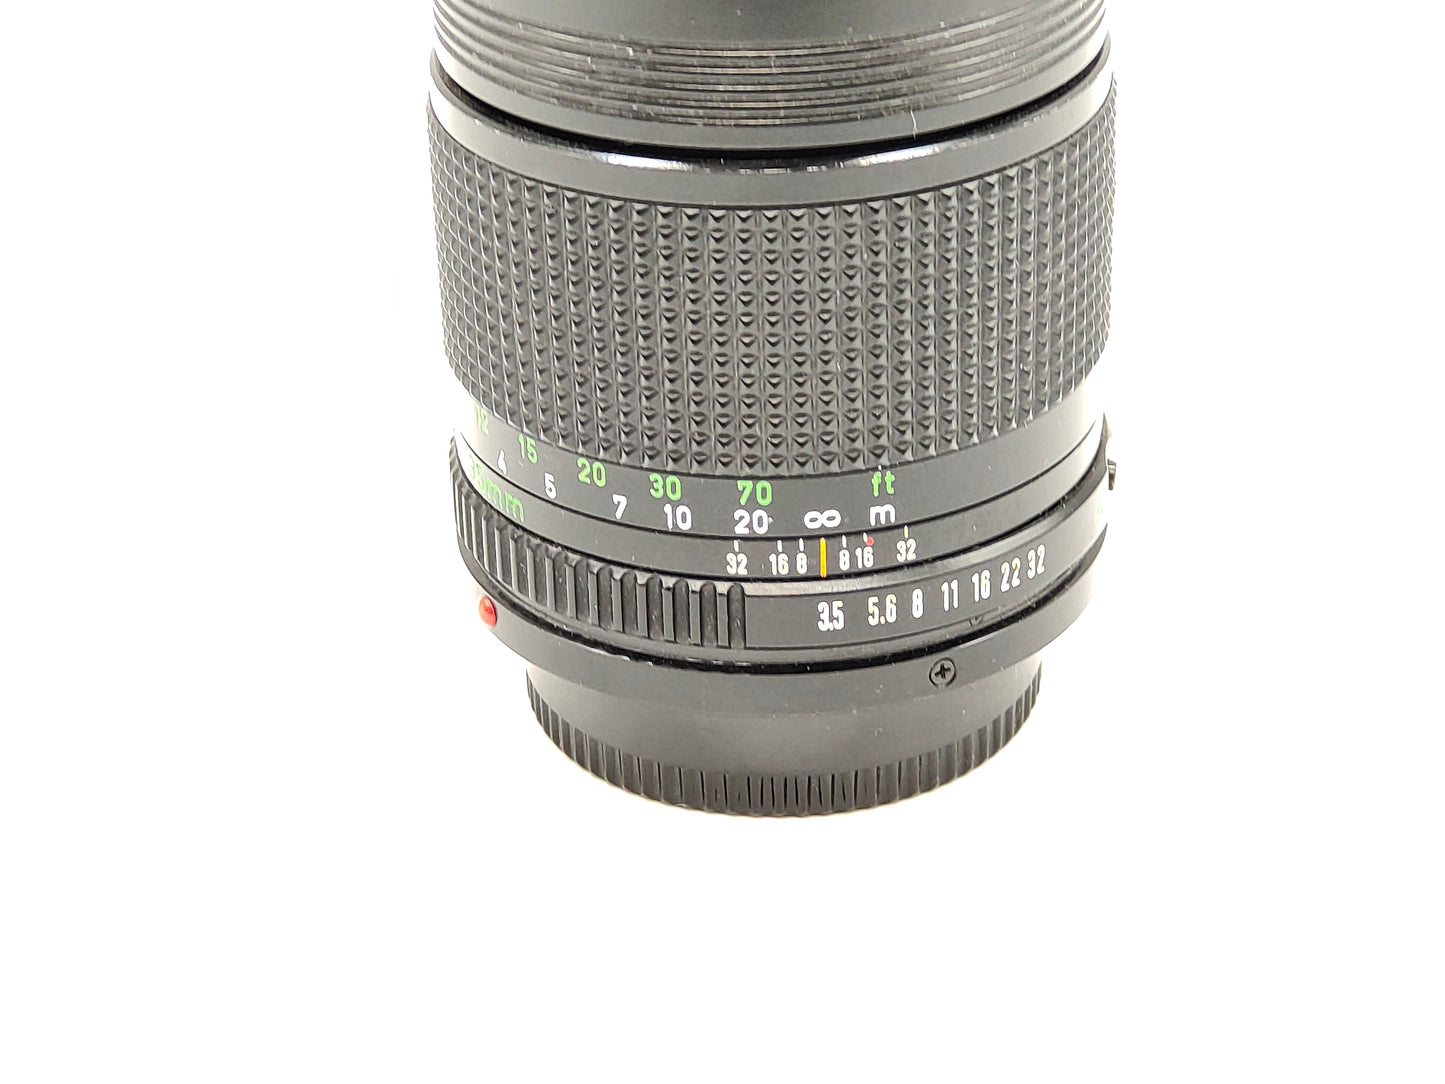 Canon lens: 135mm f/3.5 New FD portrait / medium telephoto lens for AE-1, FTb etc.